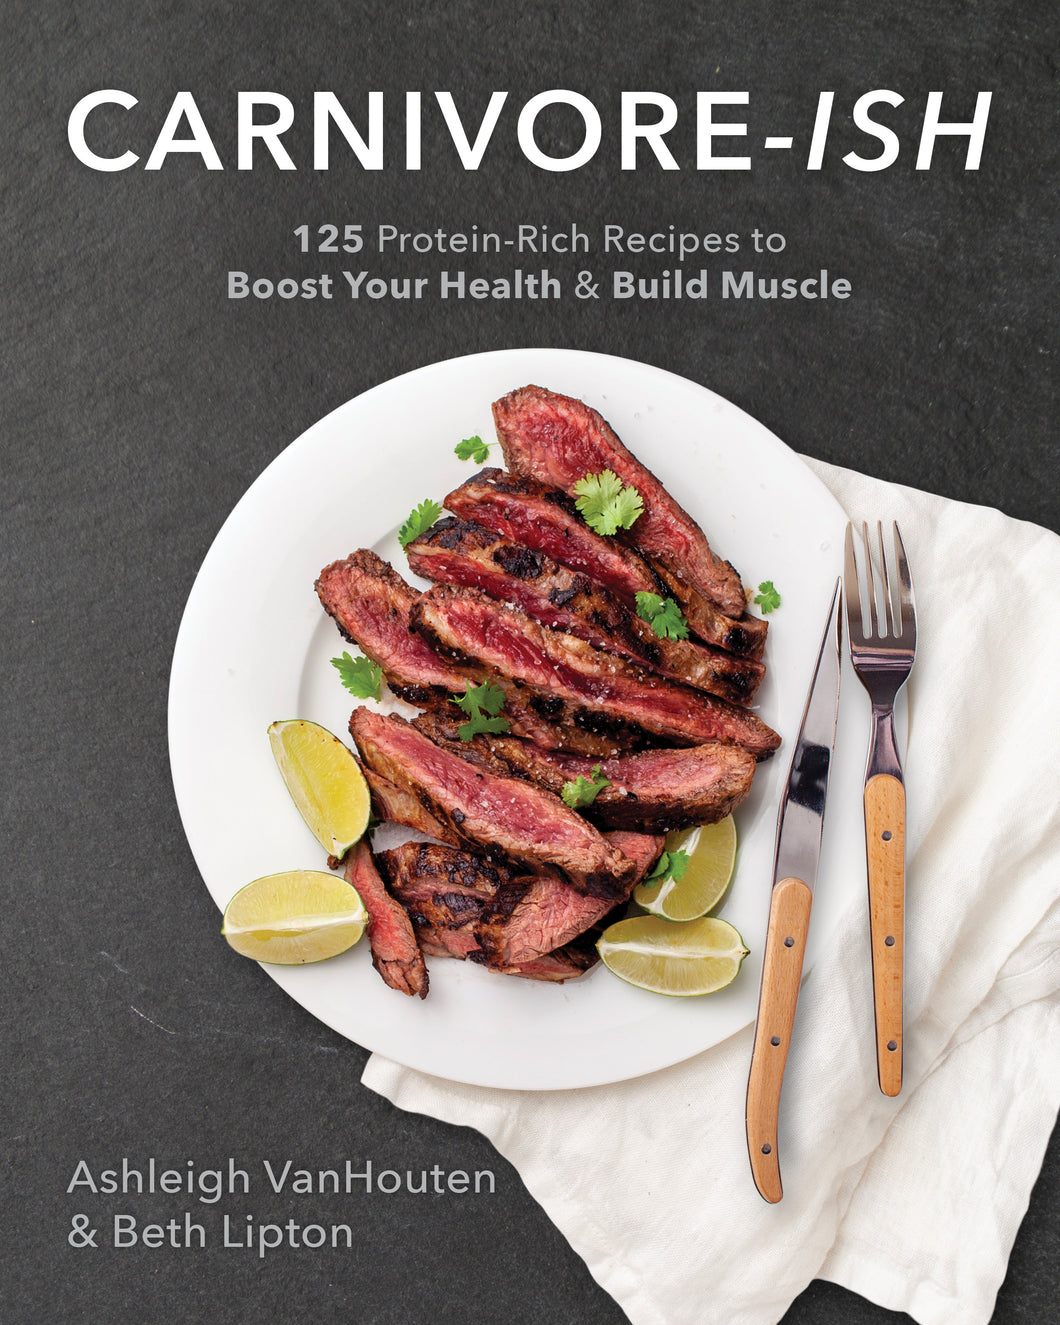 FREE Carnivore-ish Ebook!